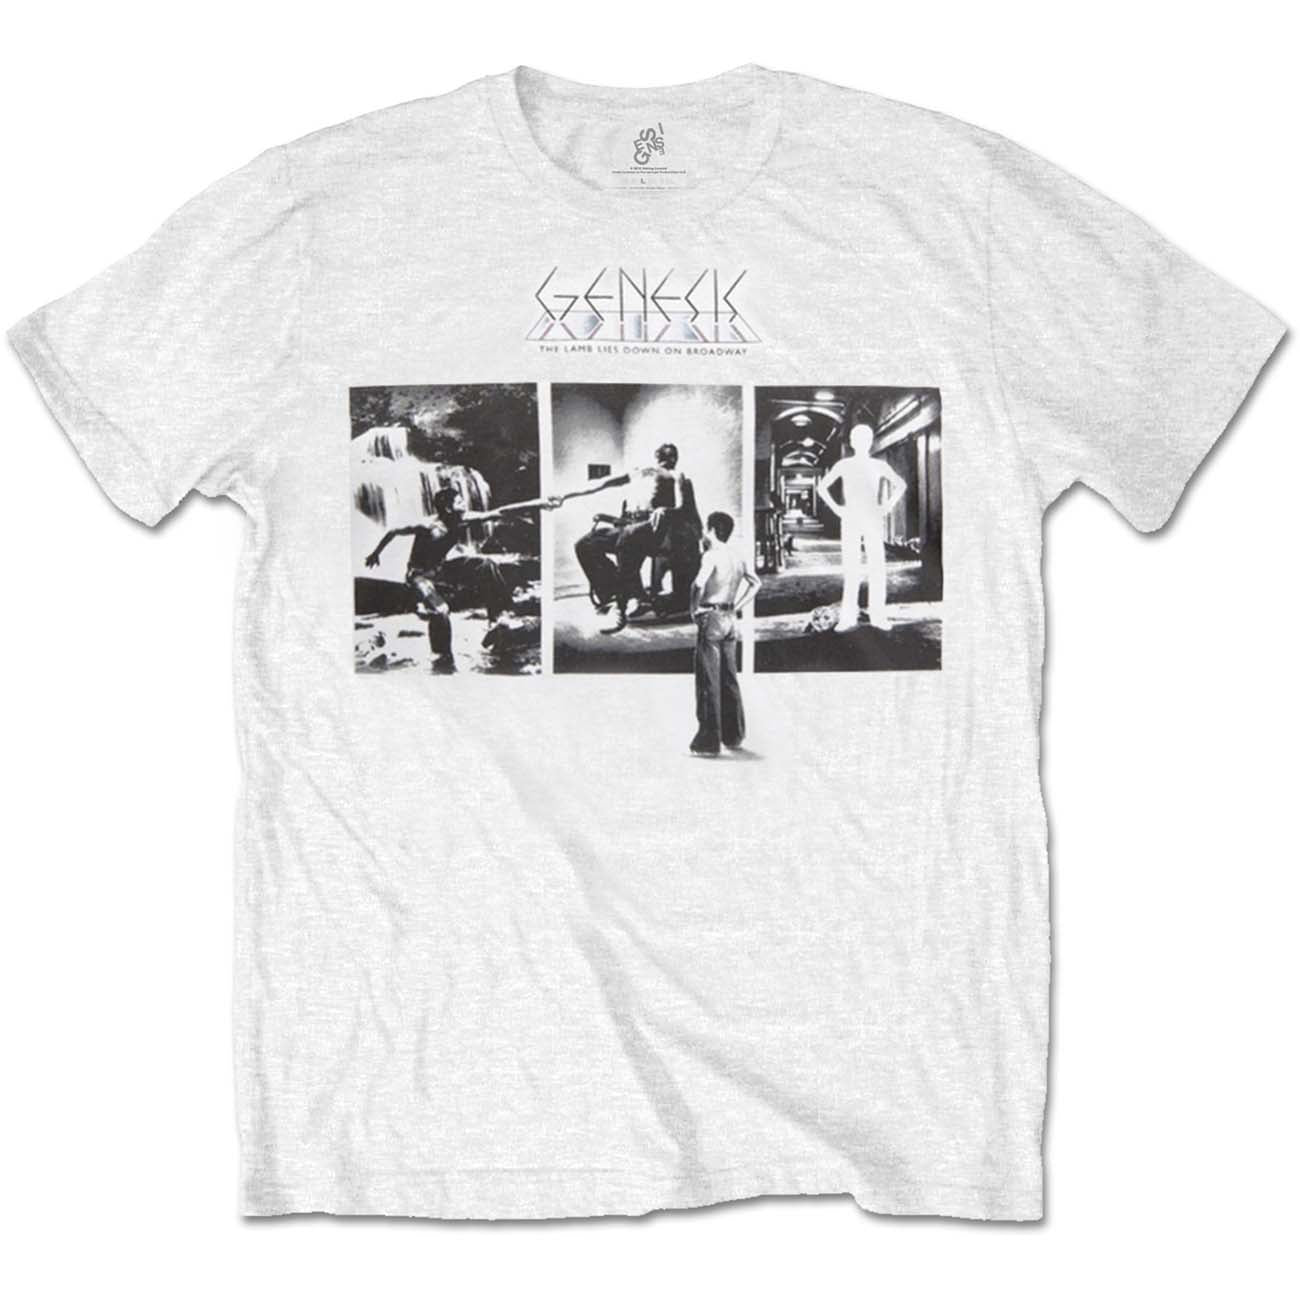 Genesis T-Shirt: The Lamb Lies Down on Broadway